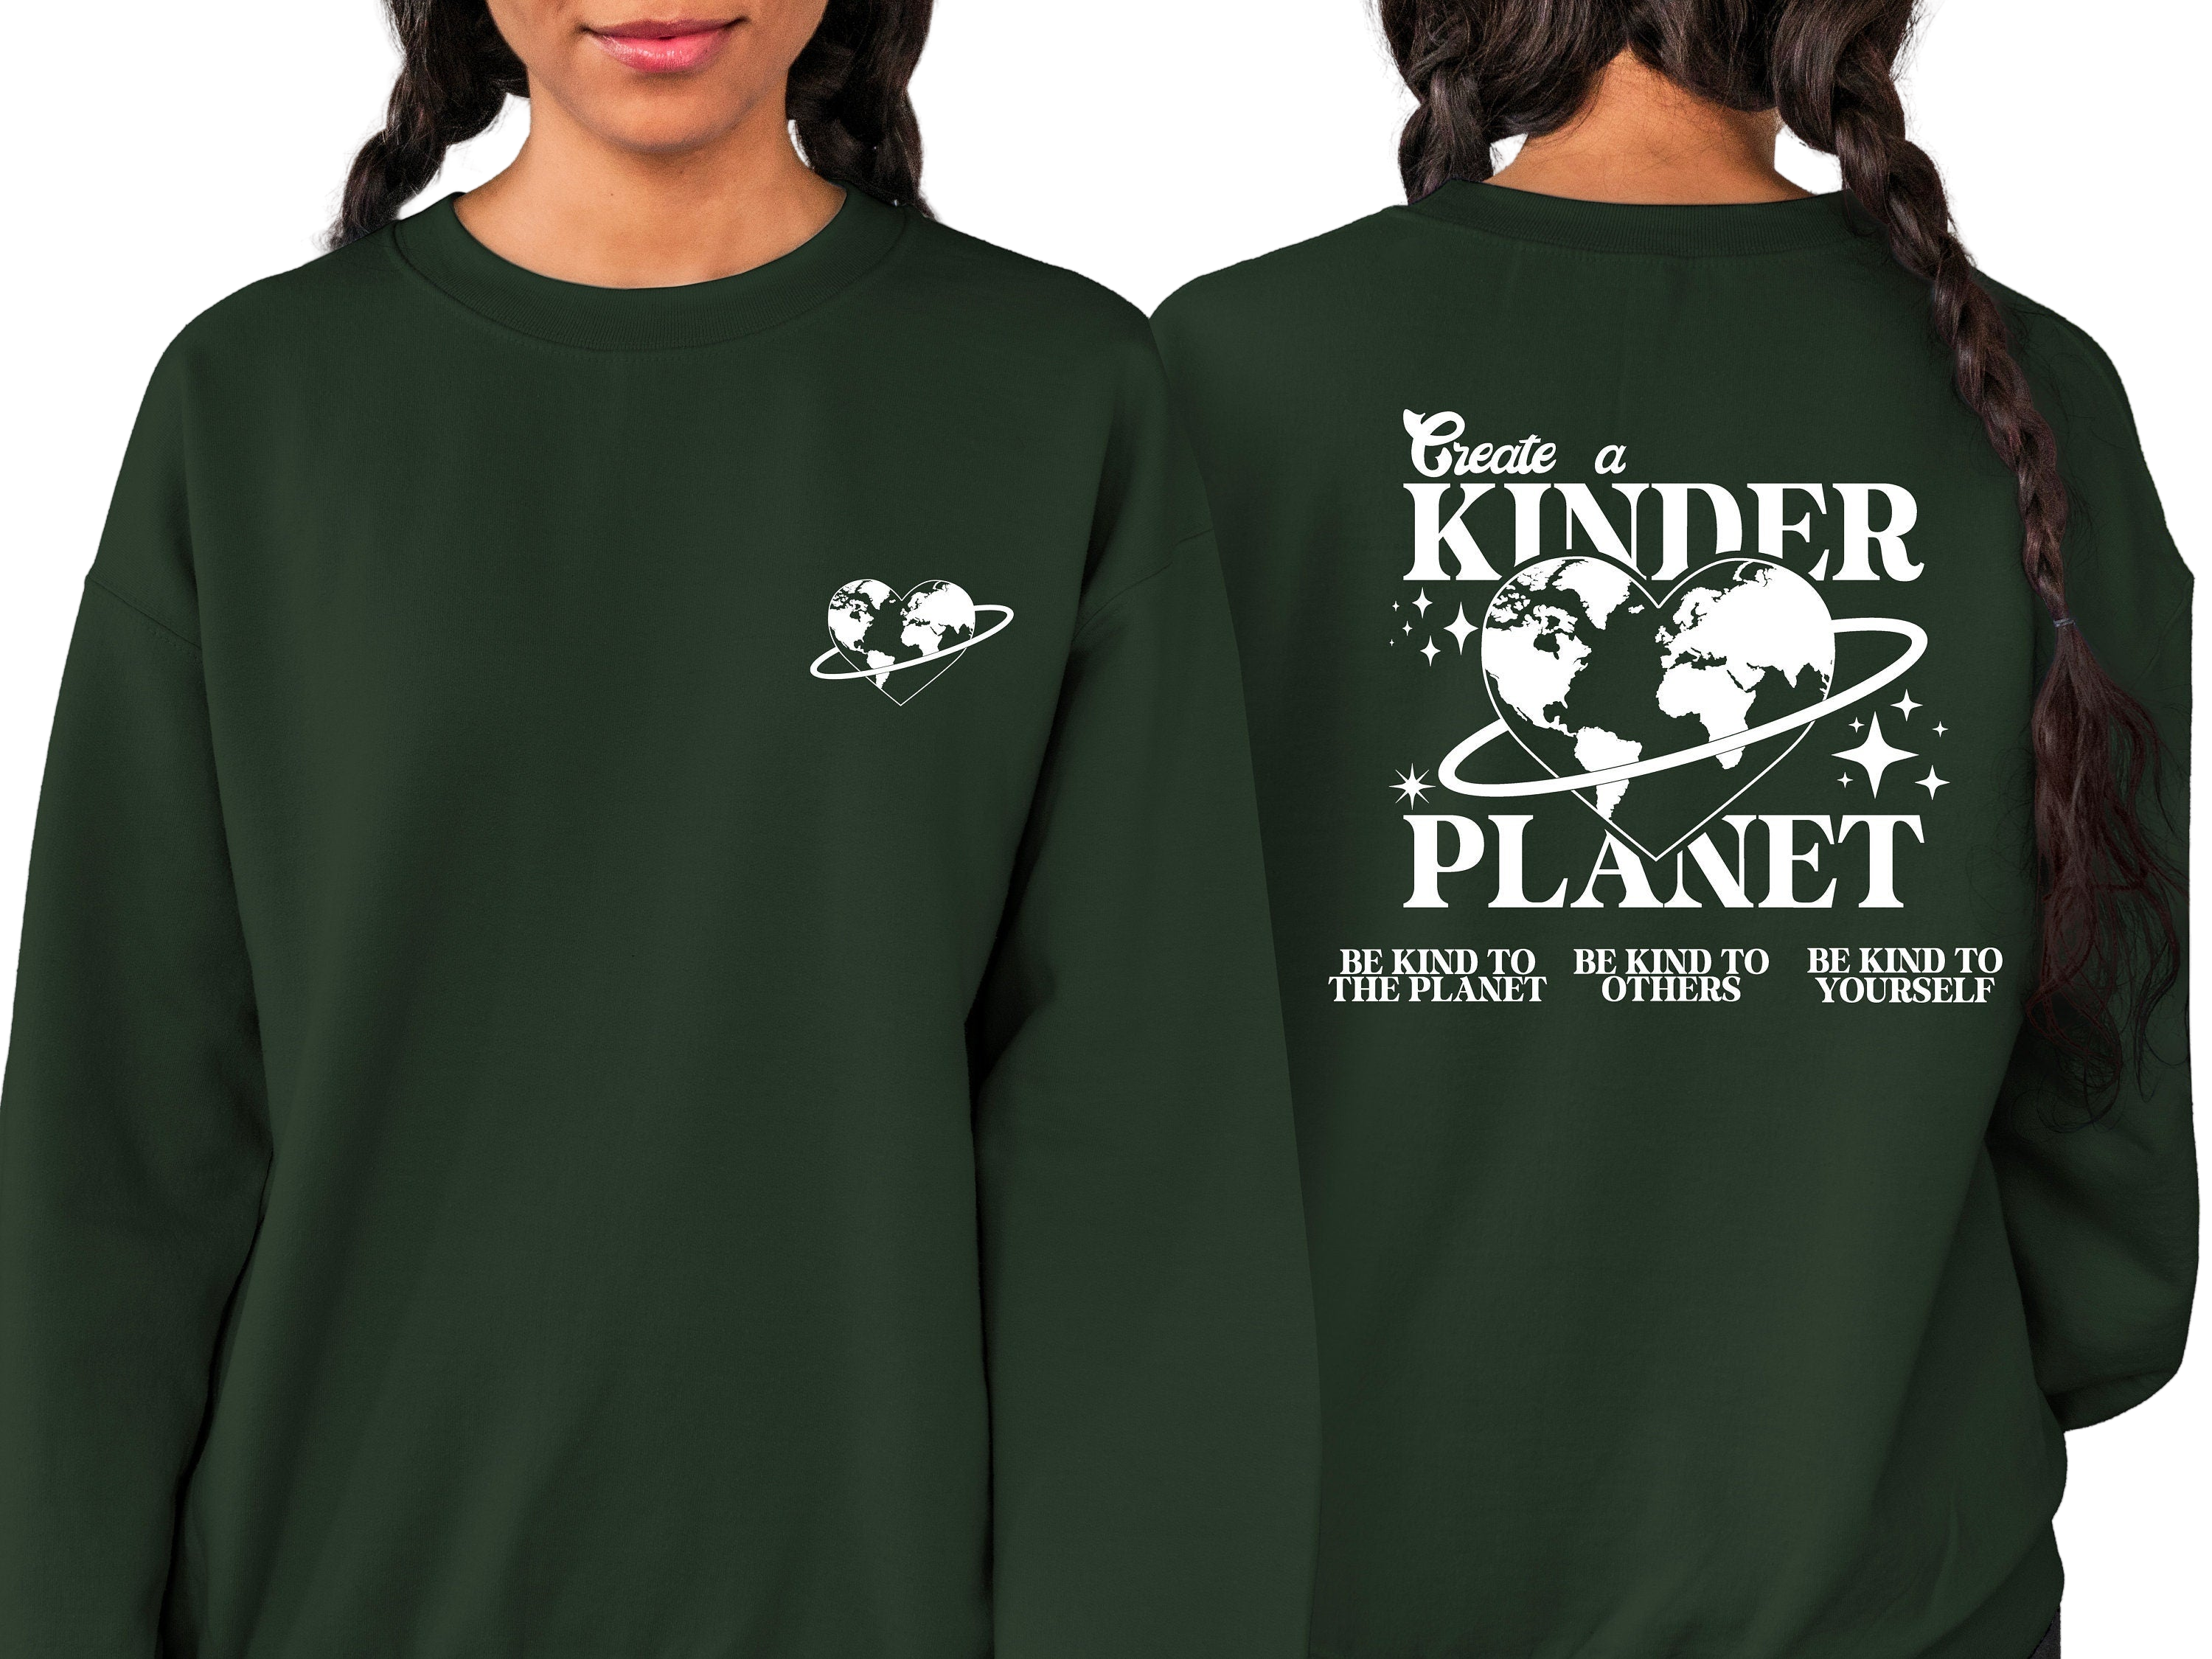 Create A Kinder Planet Sweatshirt, Positive Sweatshirt, Mental Health Awareness, Grow Positive